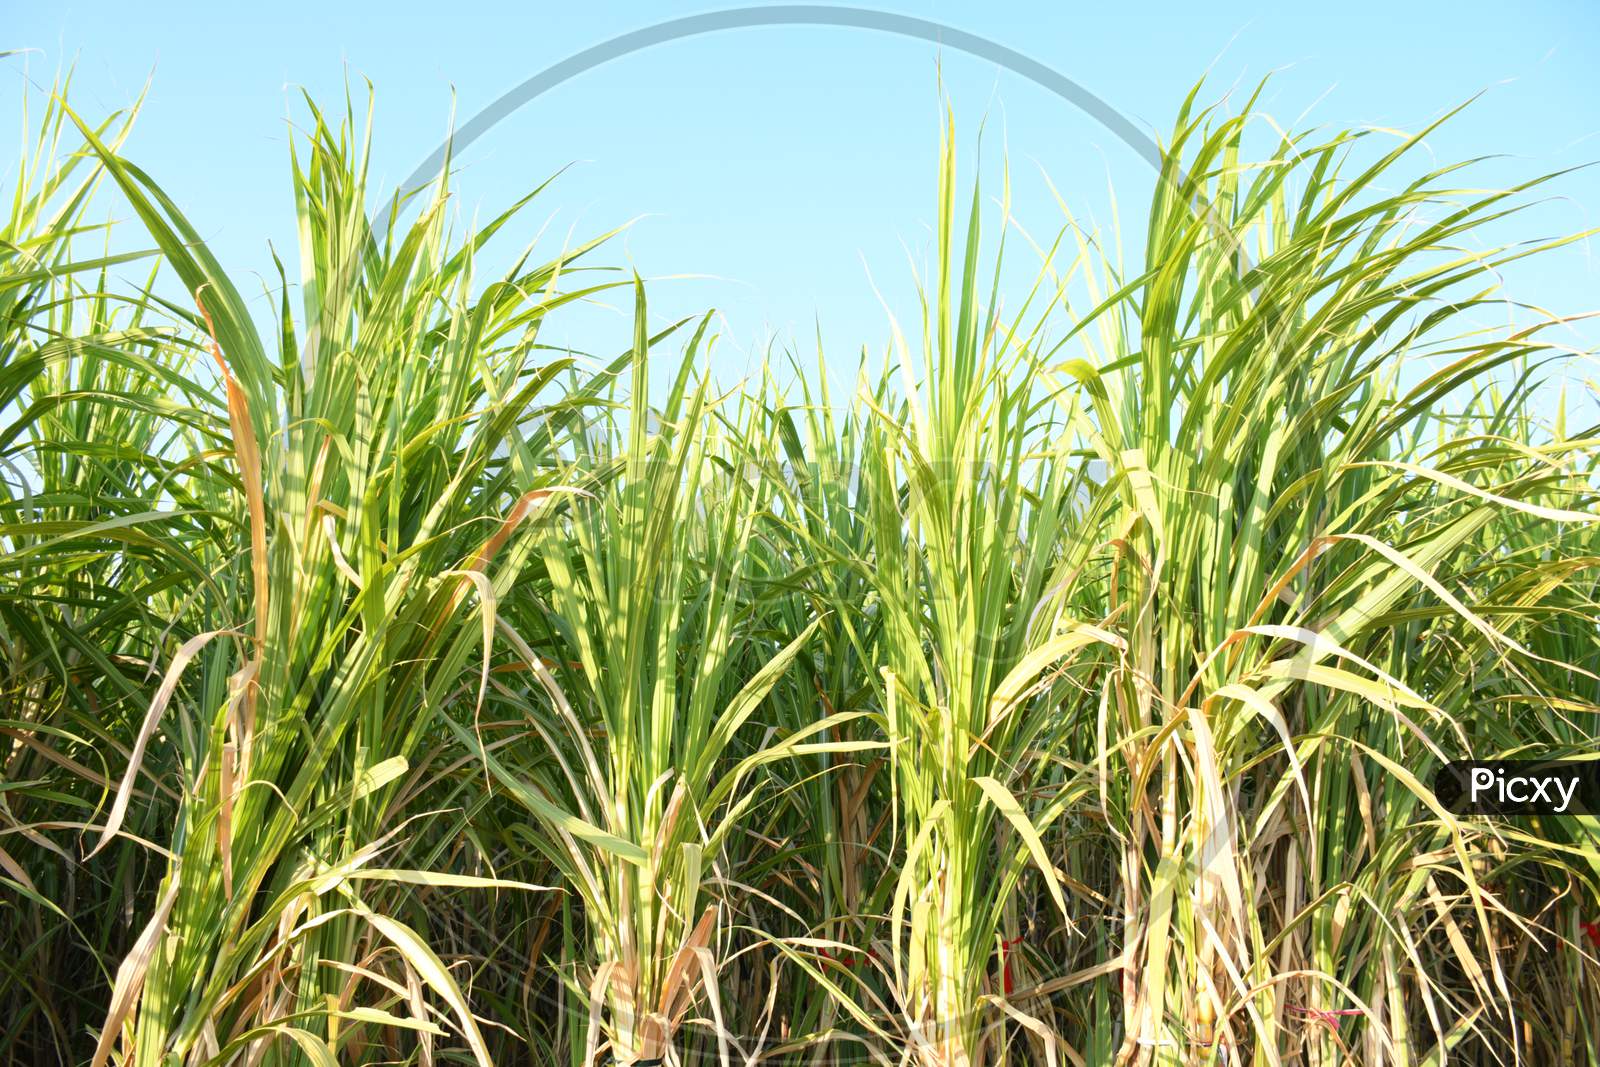 Sugarcane Farm of Gujarat, India, agriculture, Sugarcane farming